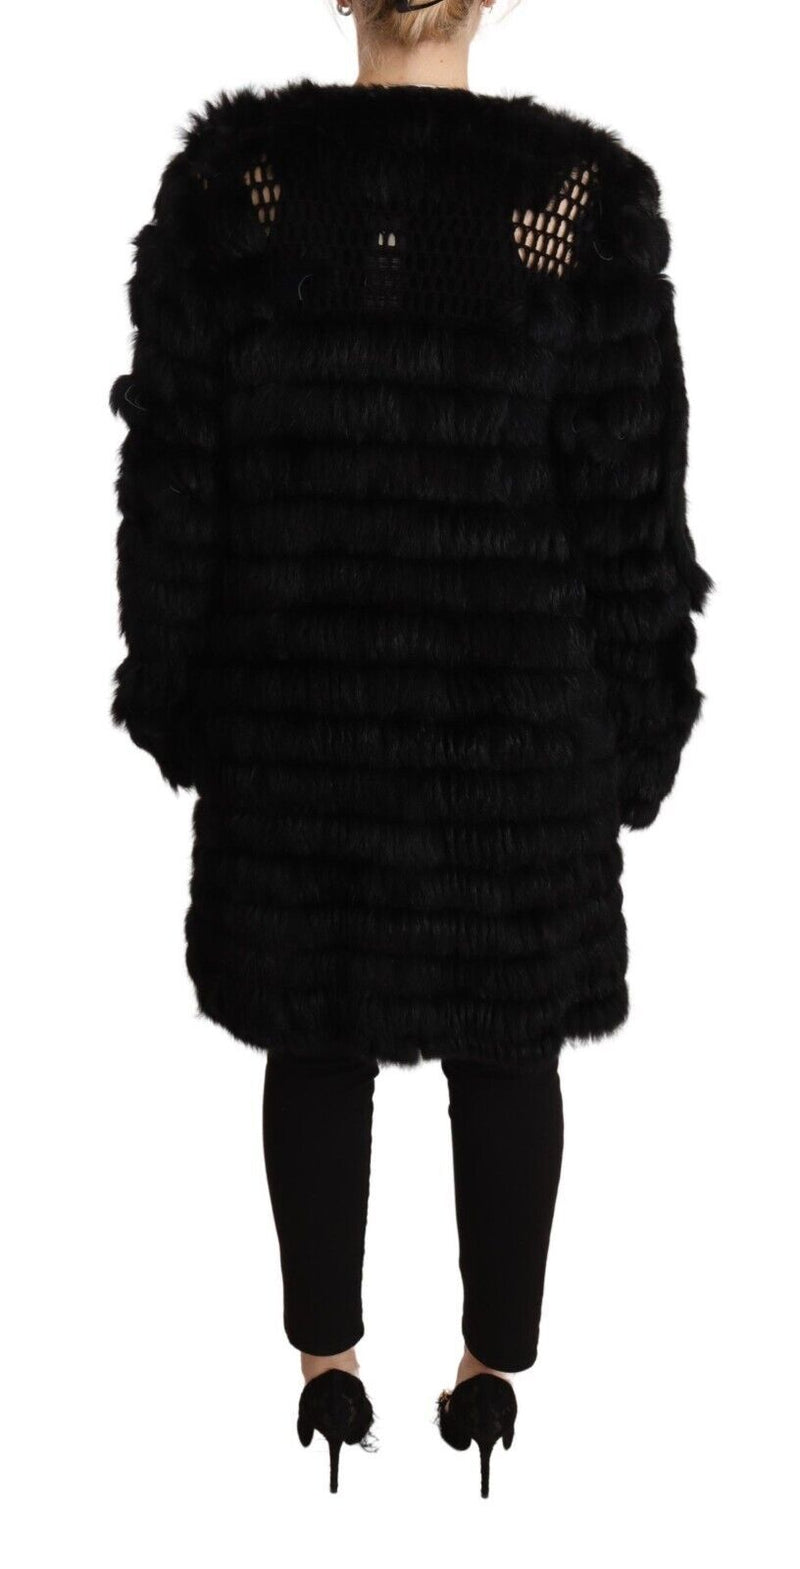 Just Cavalli Elegant Tasseled V-Neck Black Women's Cardigan